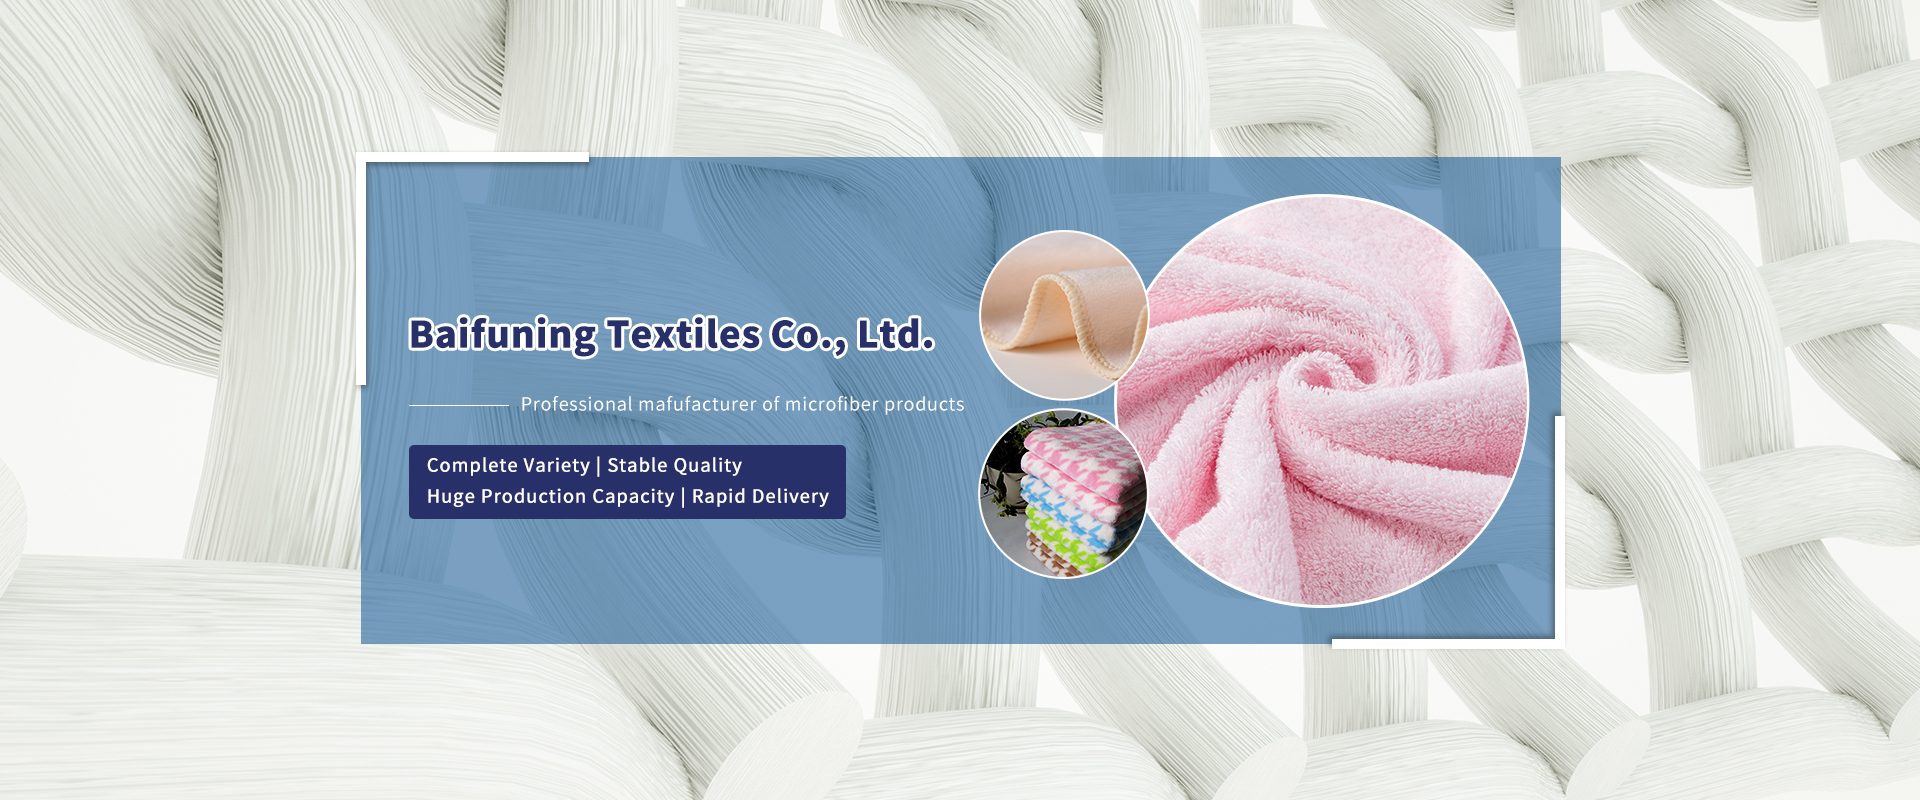 Baifuning Textiles Co., Ltd.